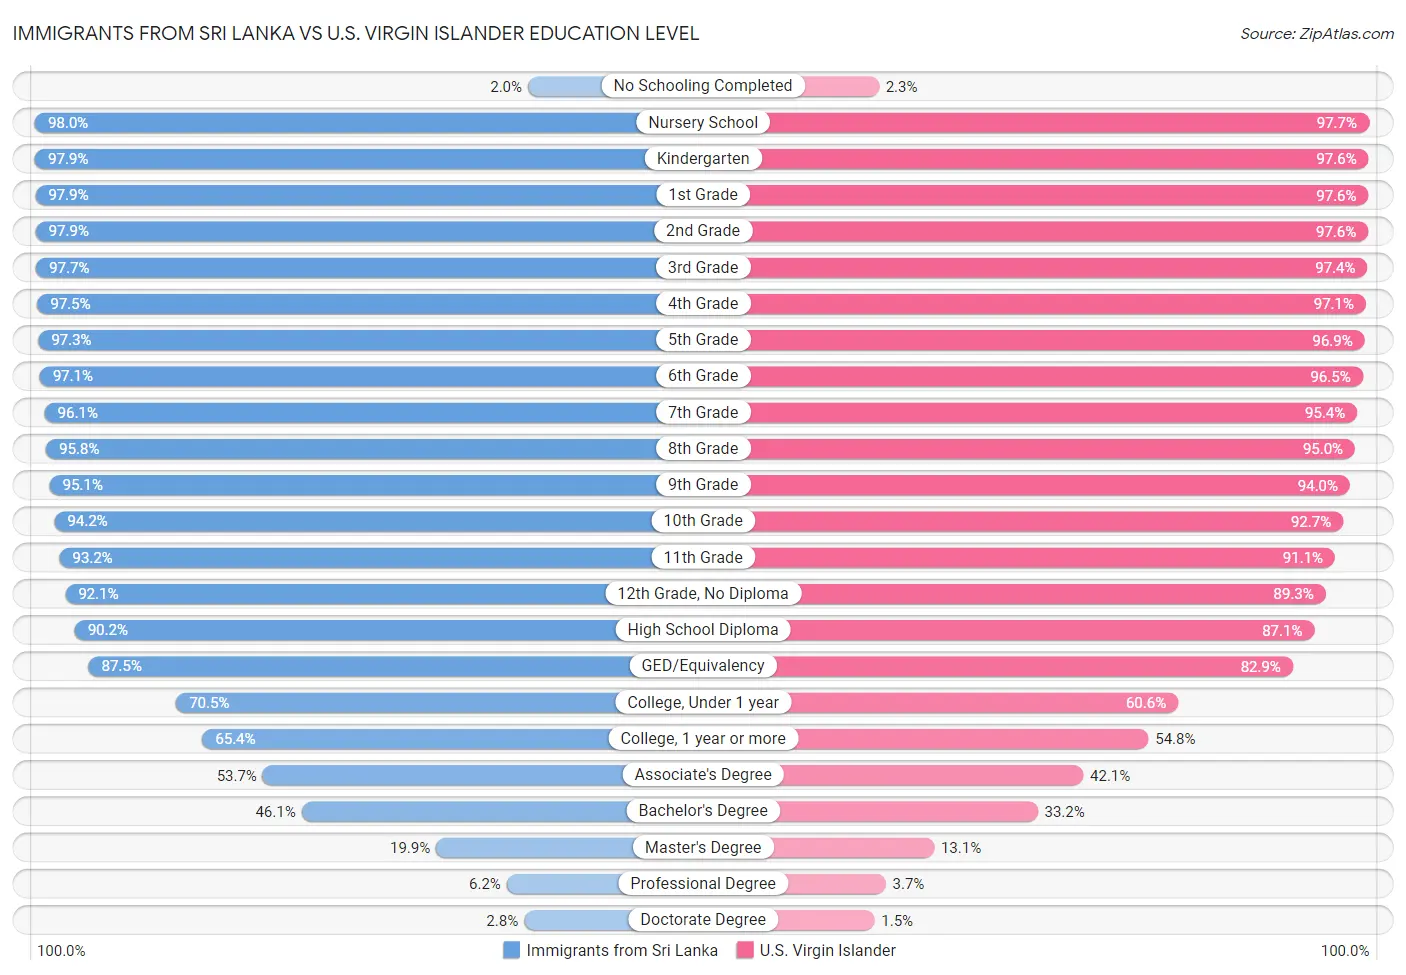 Immigrants from Sri Lanka vs U.S. Virgin Islander Education Level